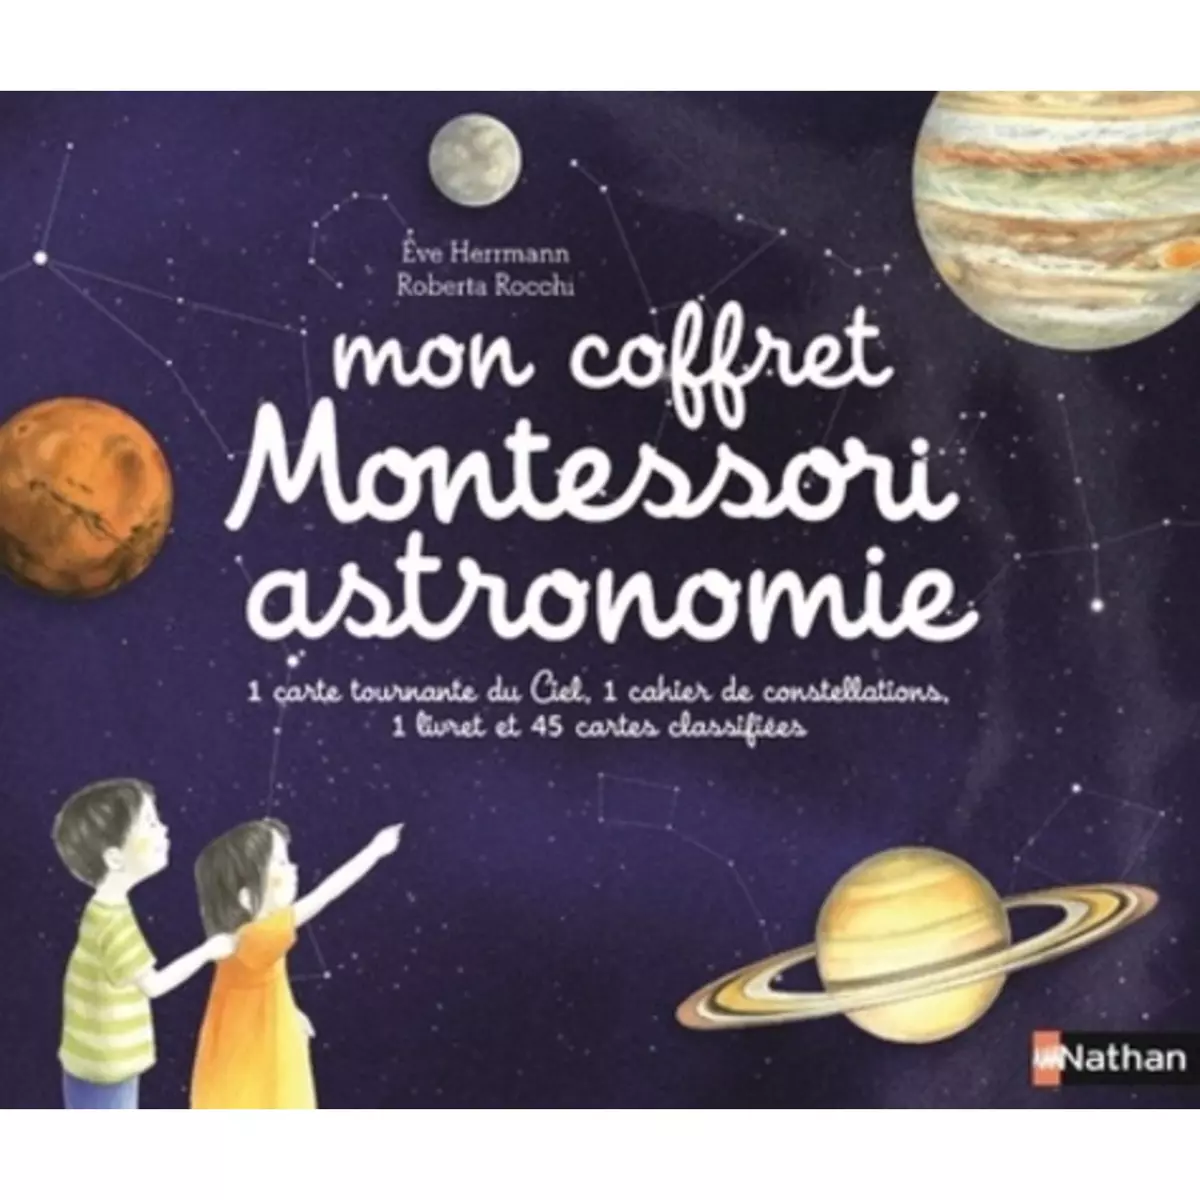  ASTRONOMIE. AVEC 1 CARTE TOURNANTE DU CIEL, 1 CARNET DE CONSTELLATIONS, Herrmann Eve